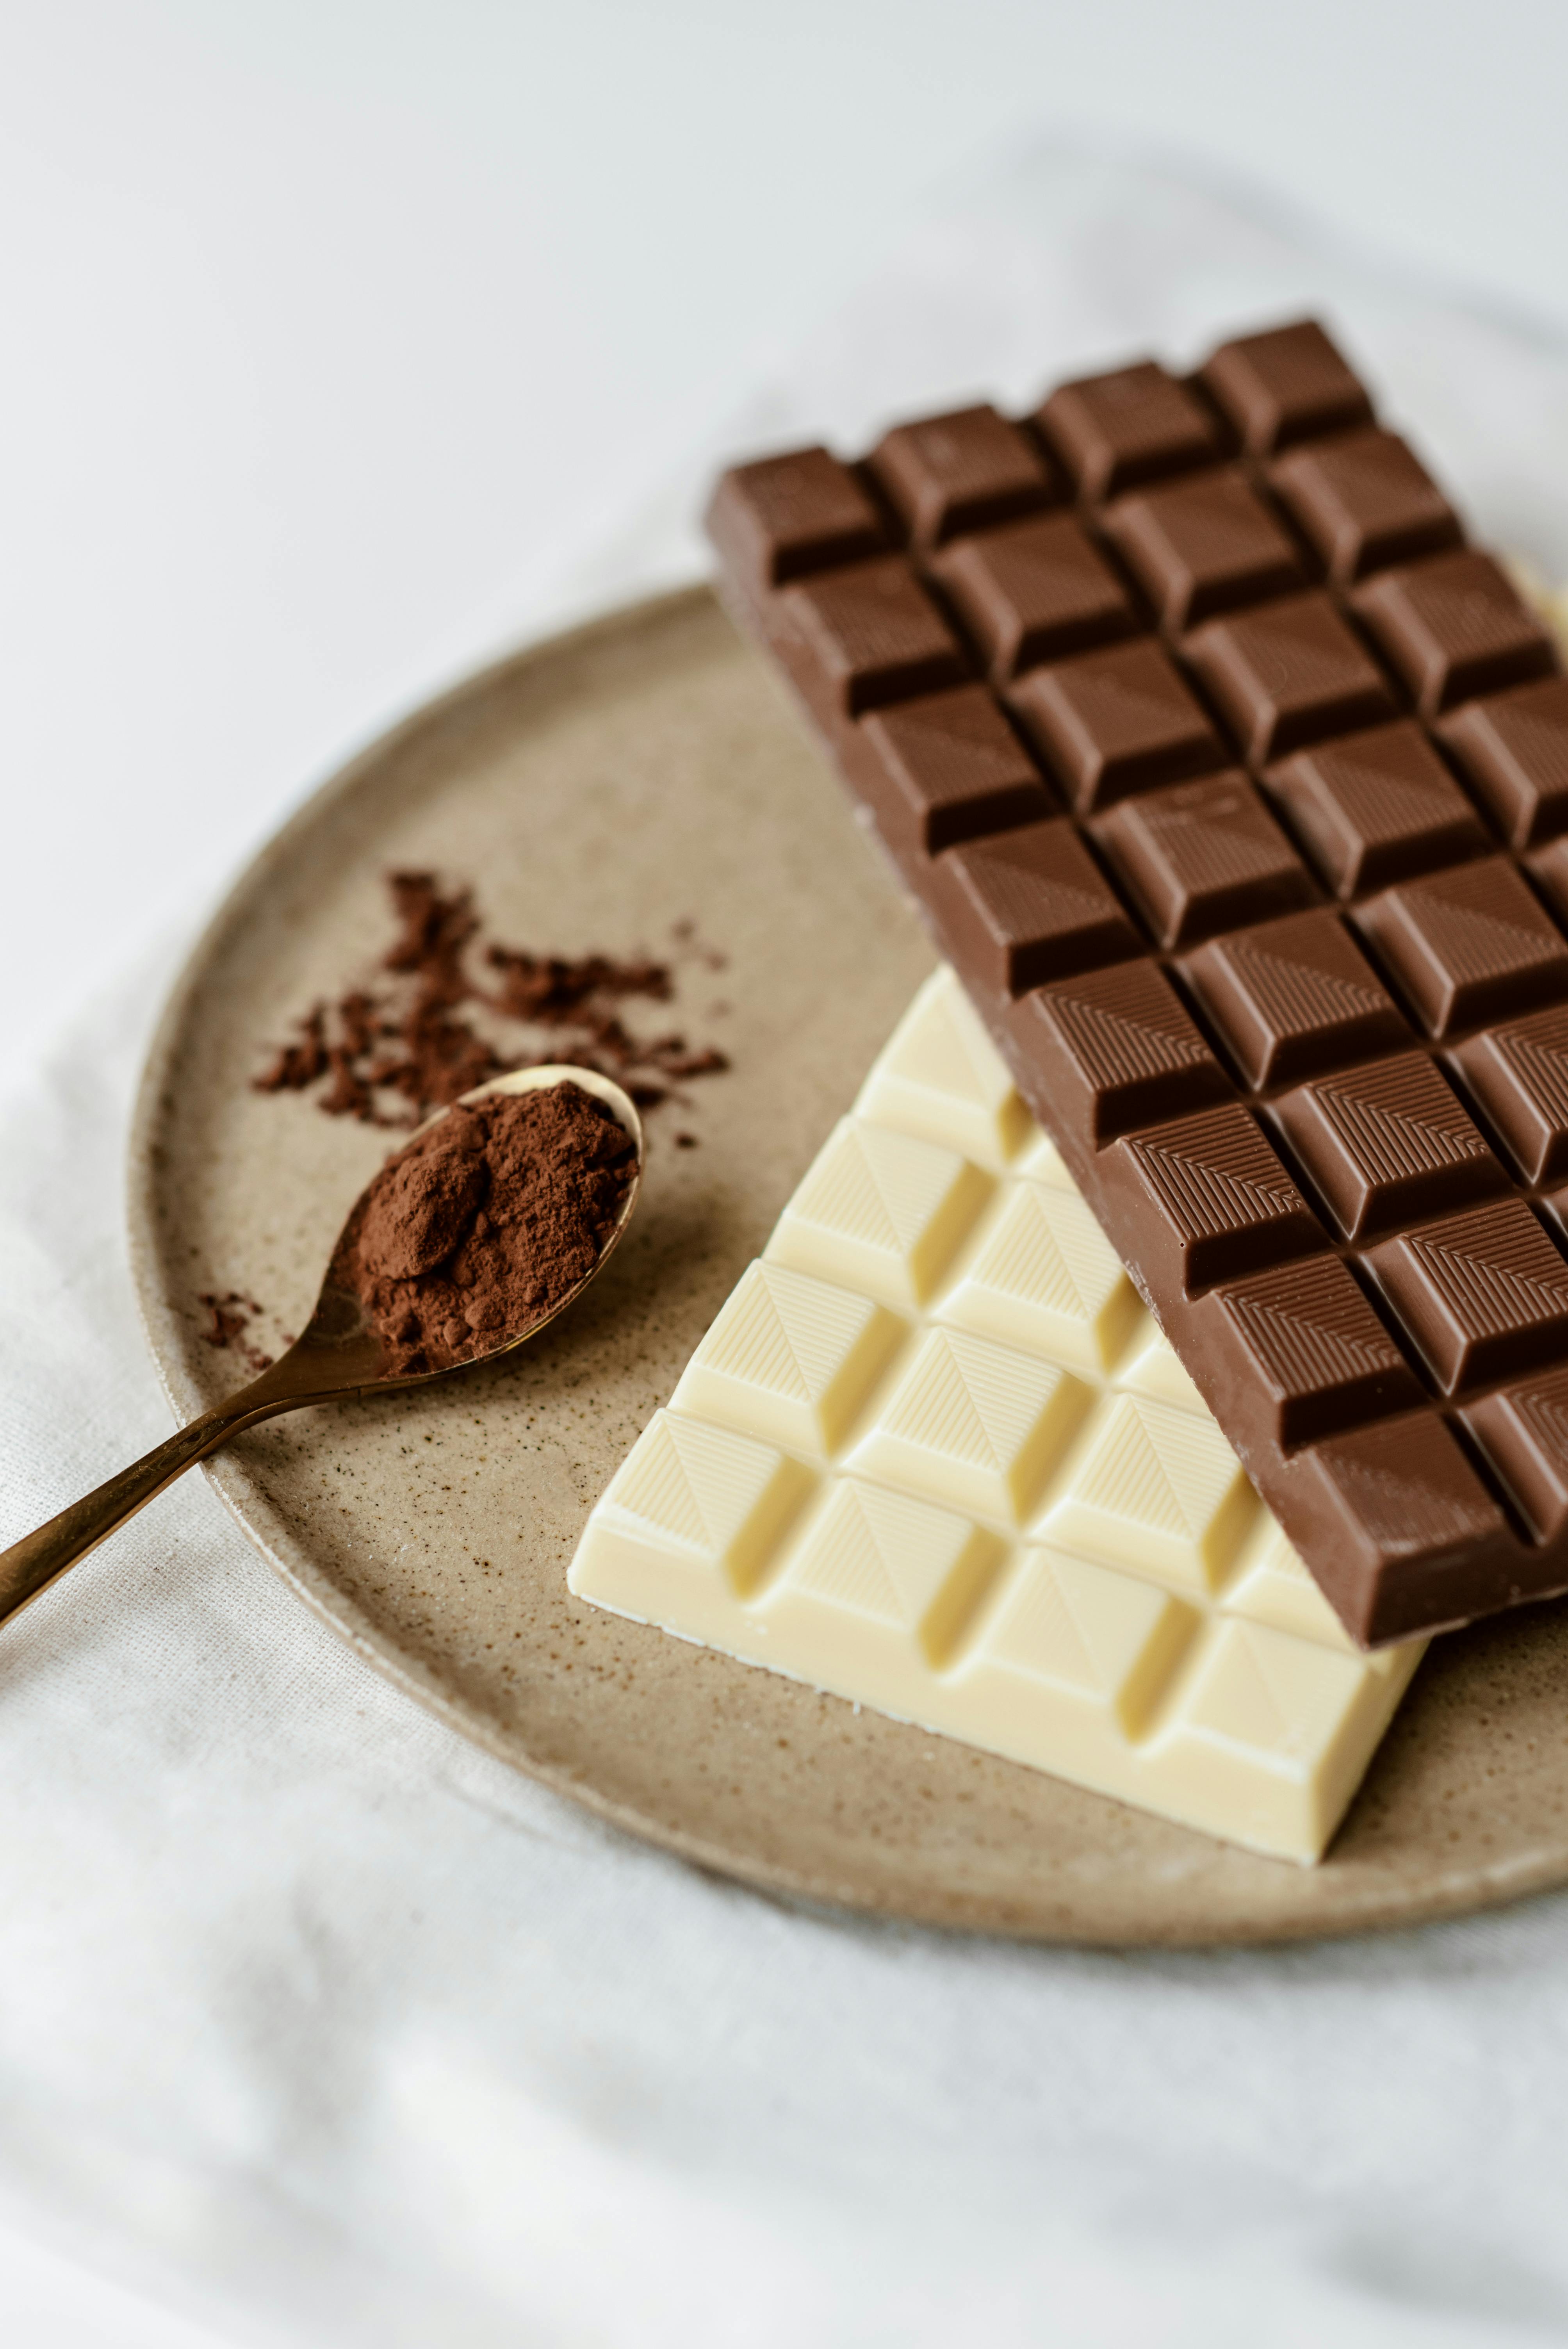 7,000+ Best Chocolate Photos · 100% Free Download · Pexels Stock Photos